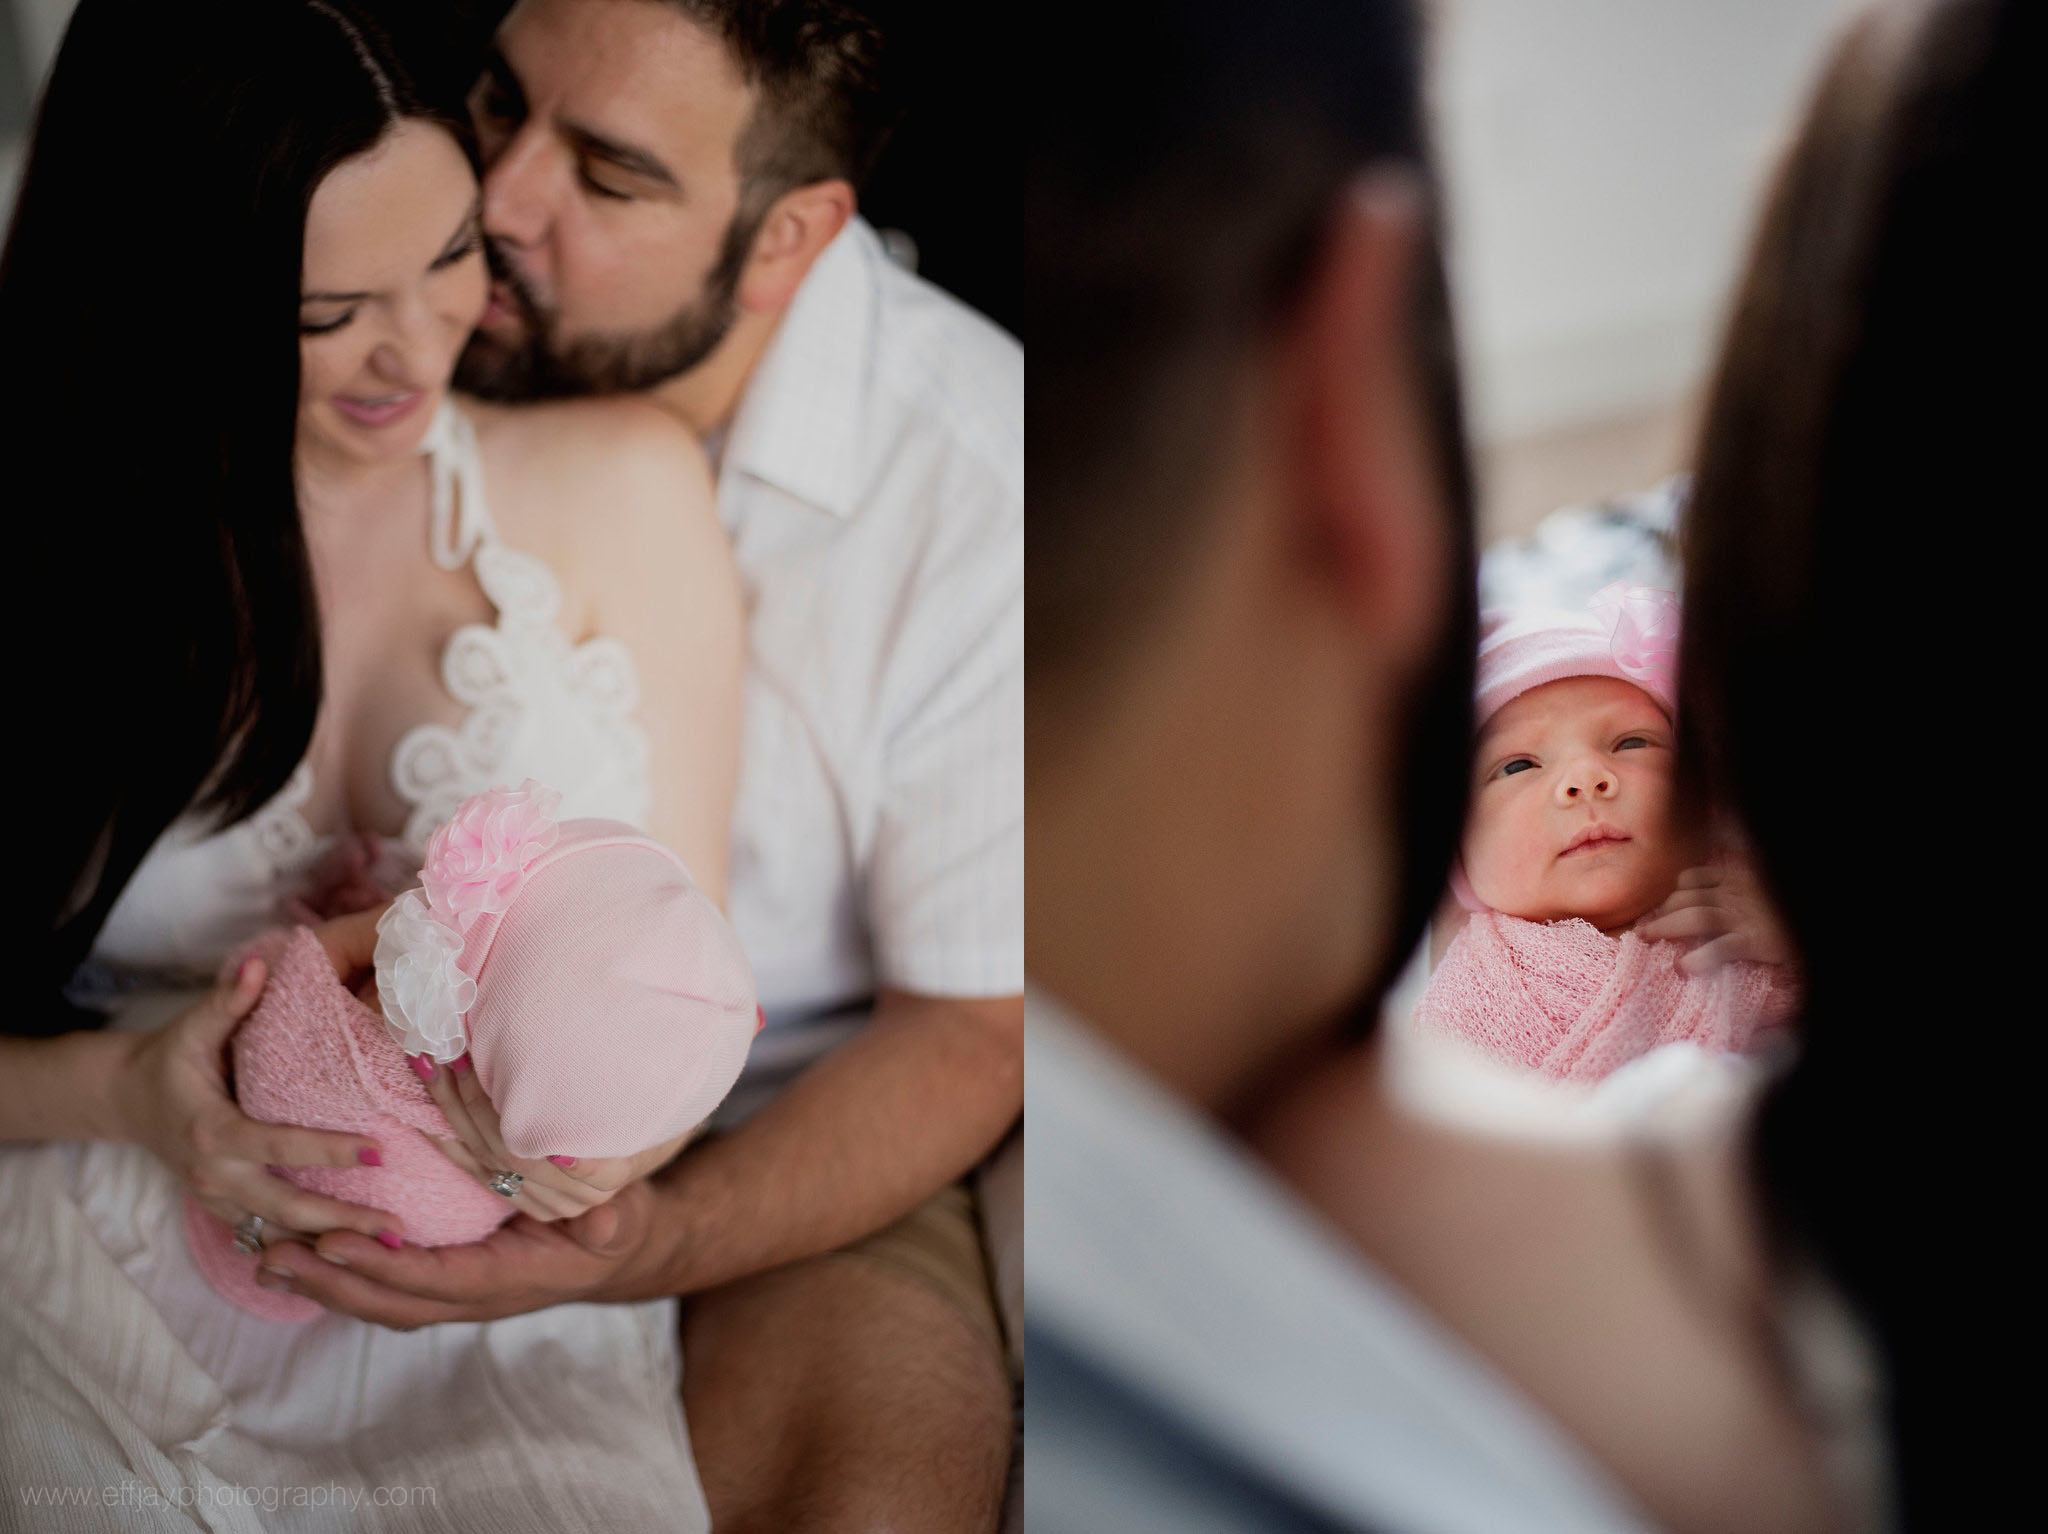 Austin Family Photographer Newborn Lifestyle In Home Session 001.jpg